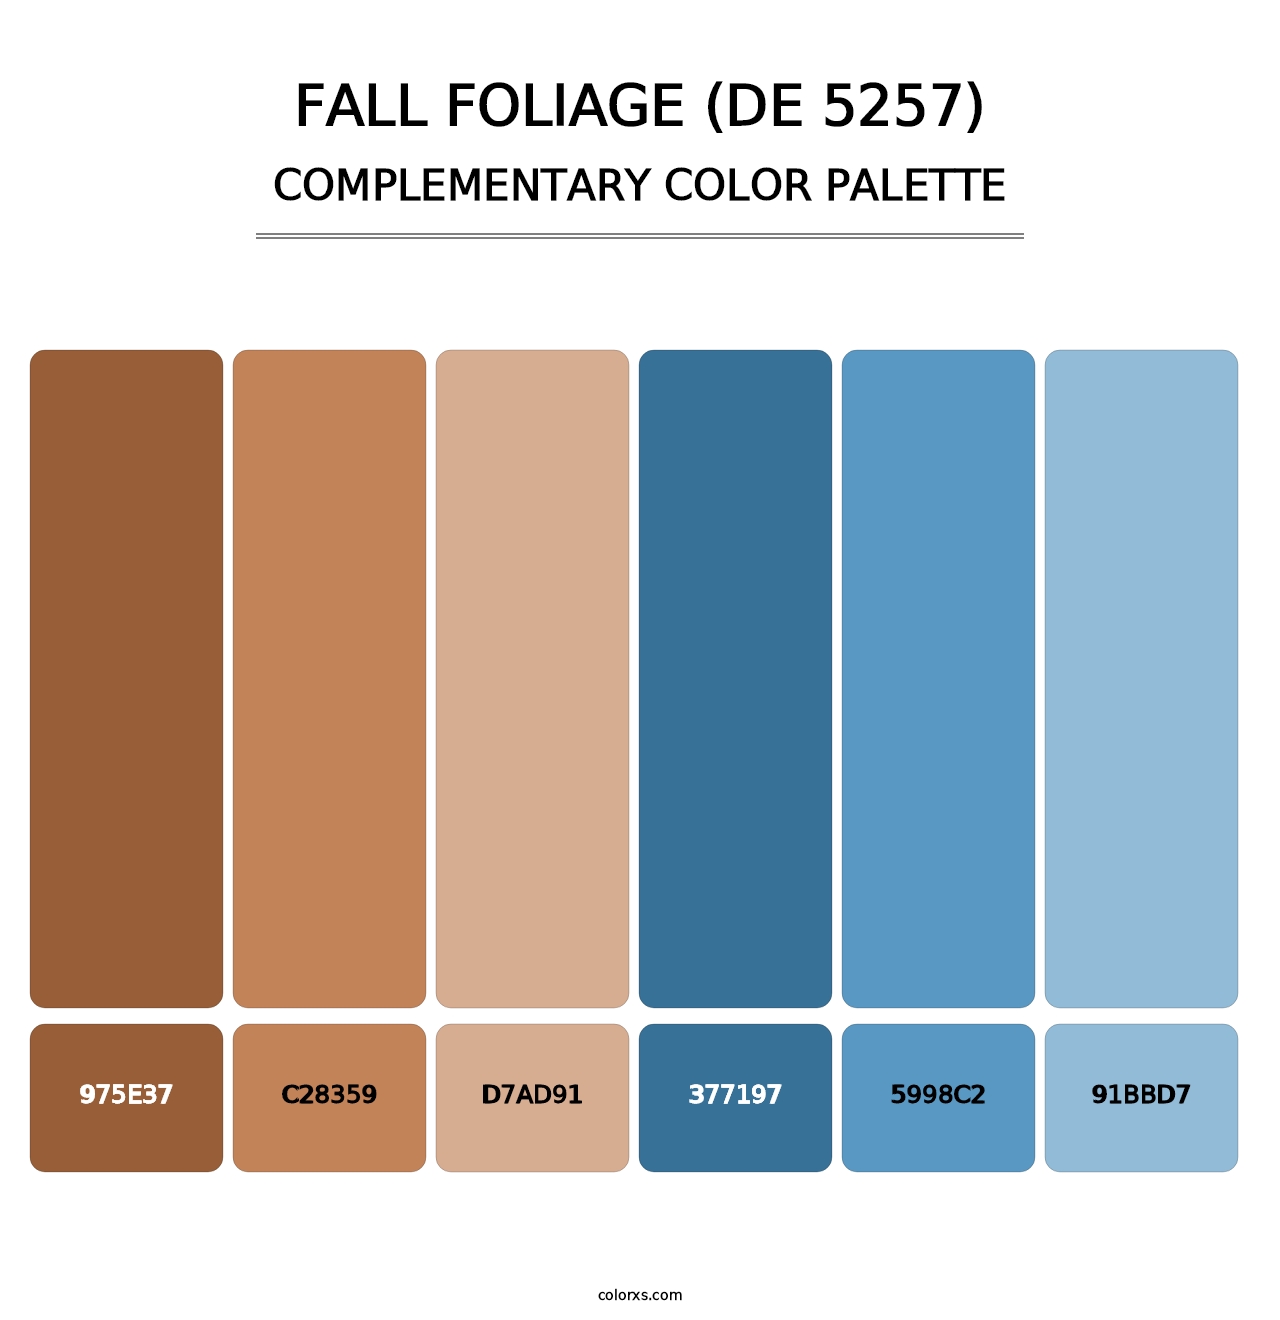 Fall Foliage (DE 5257) - Complementary Color Palette